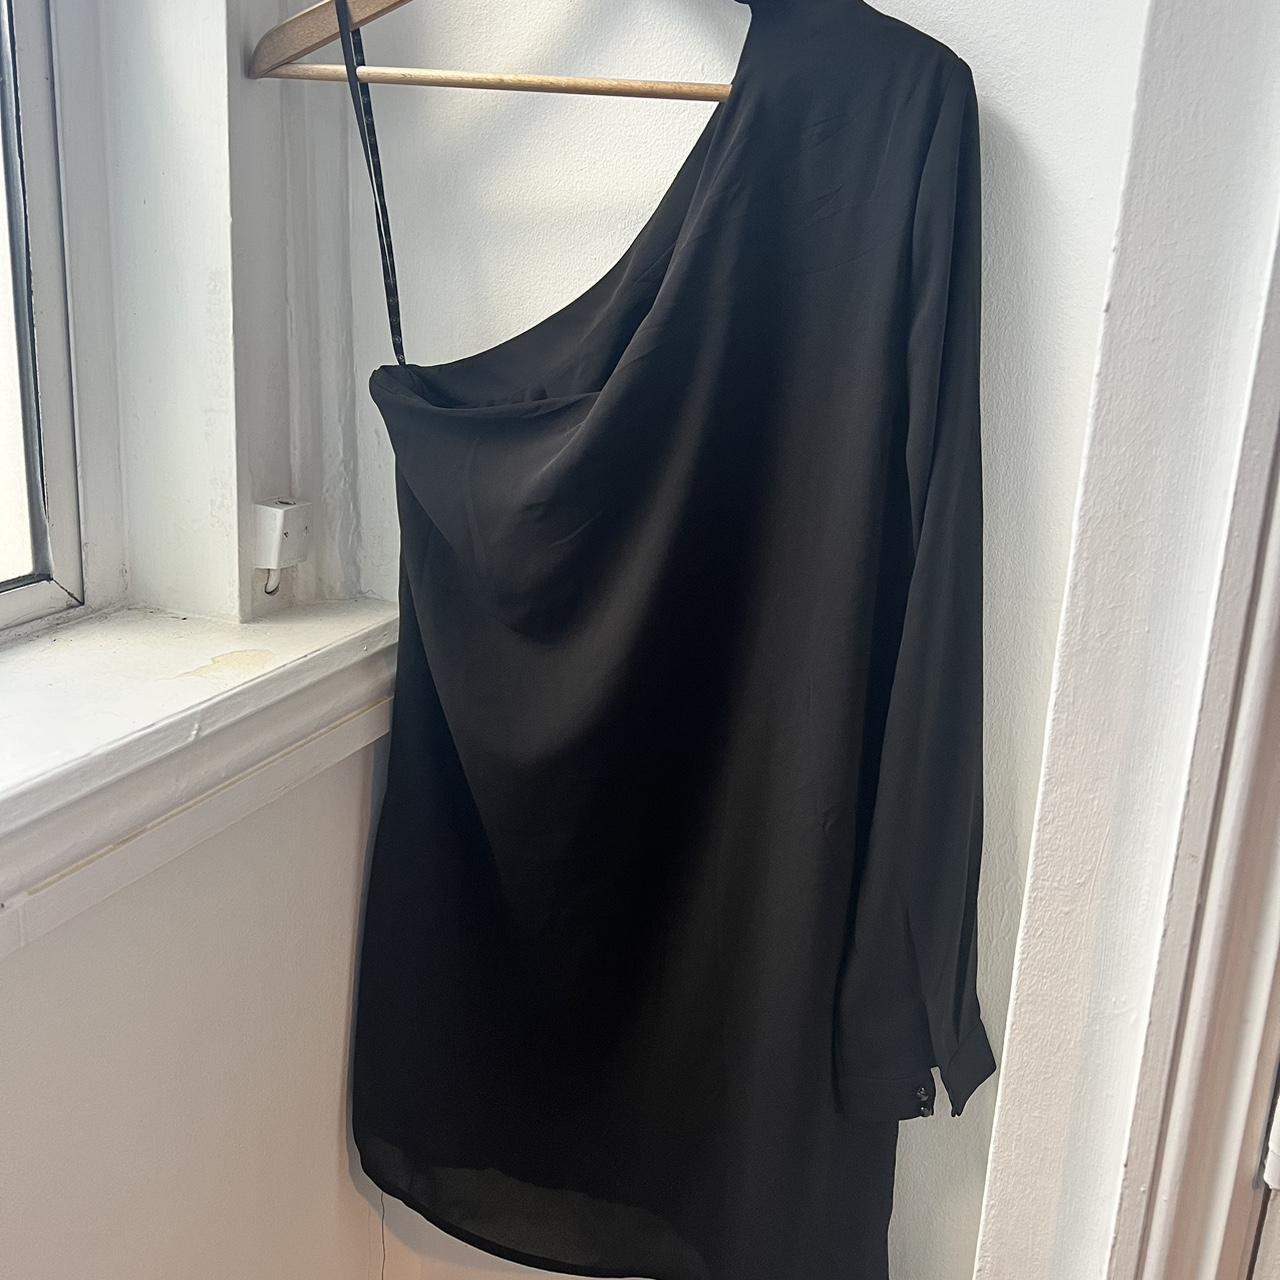 Missguided Women's Black Dress | Depop